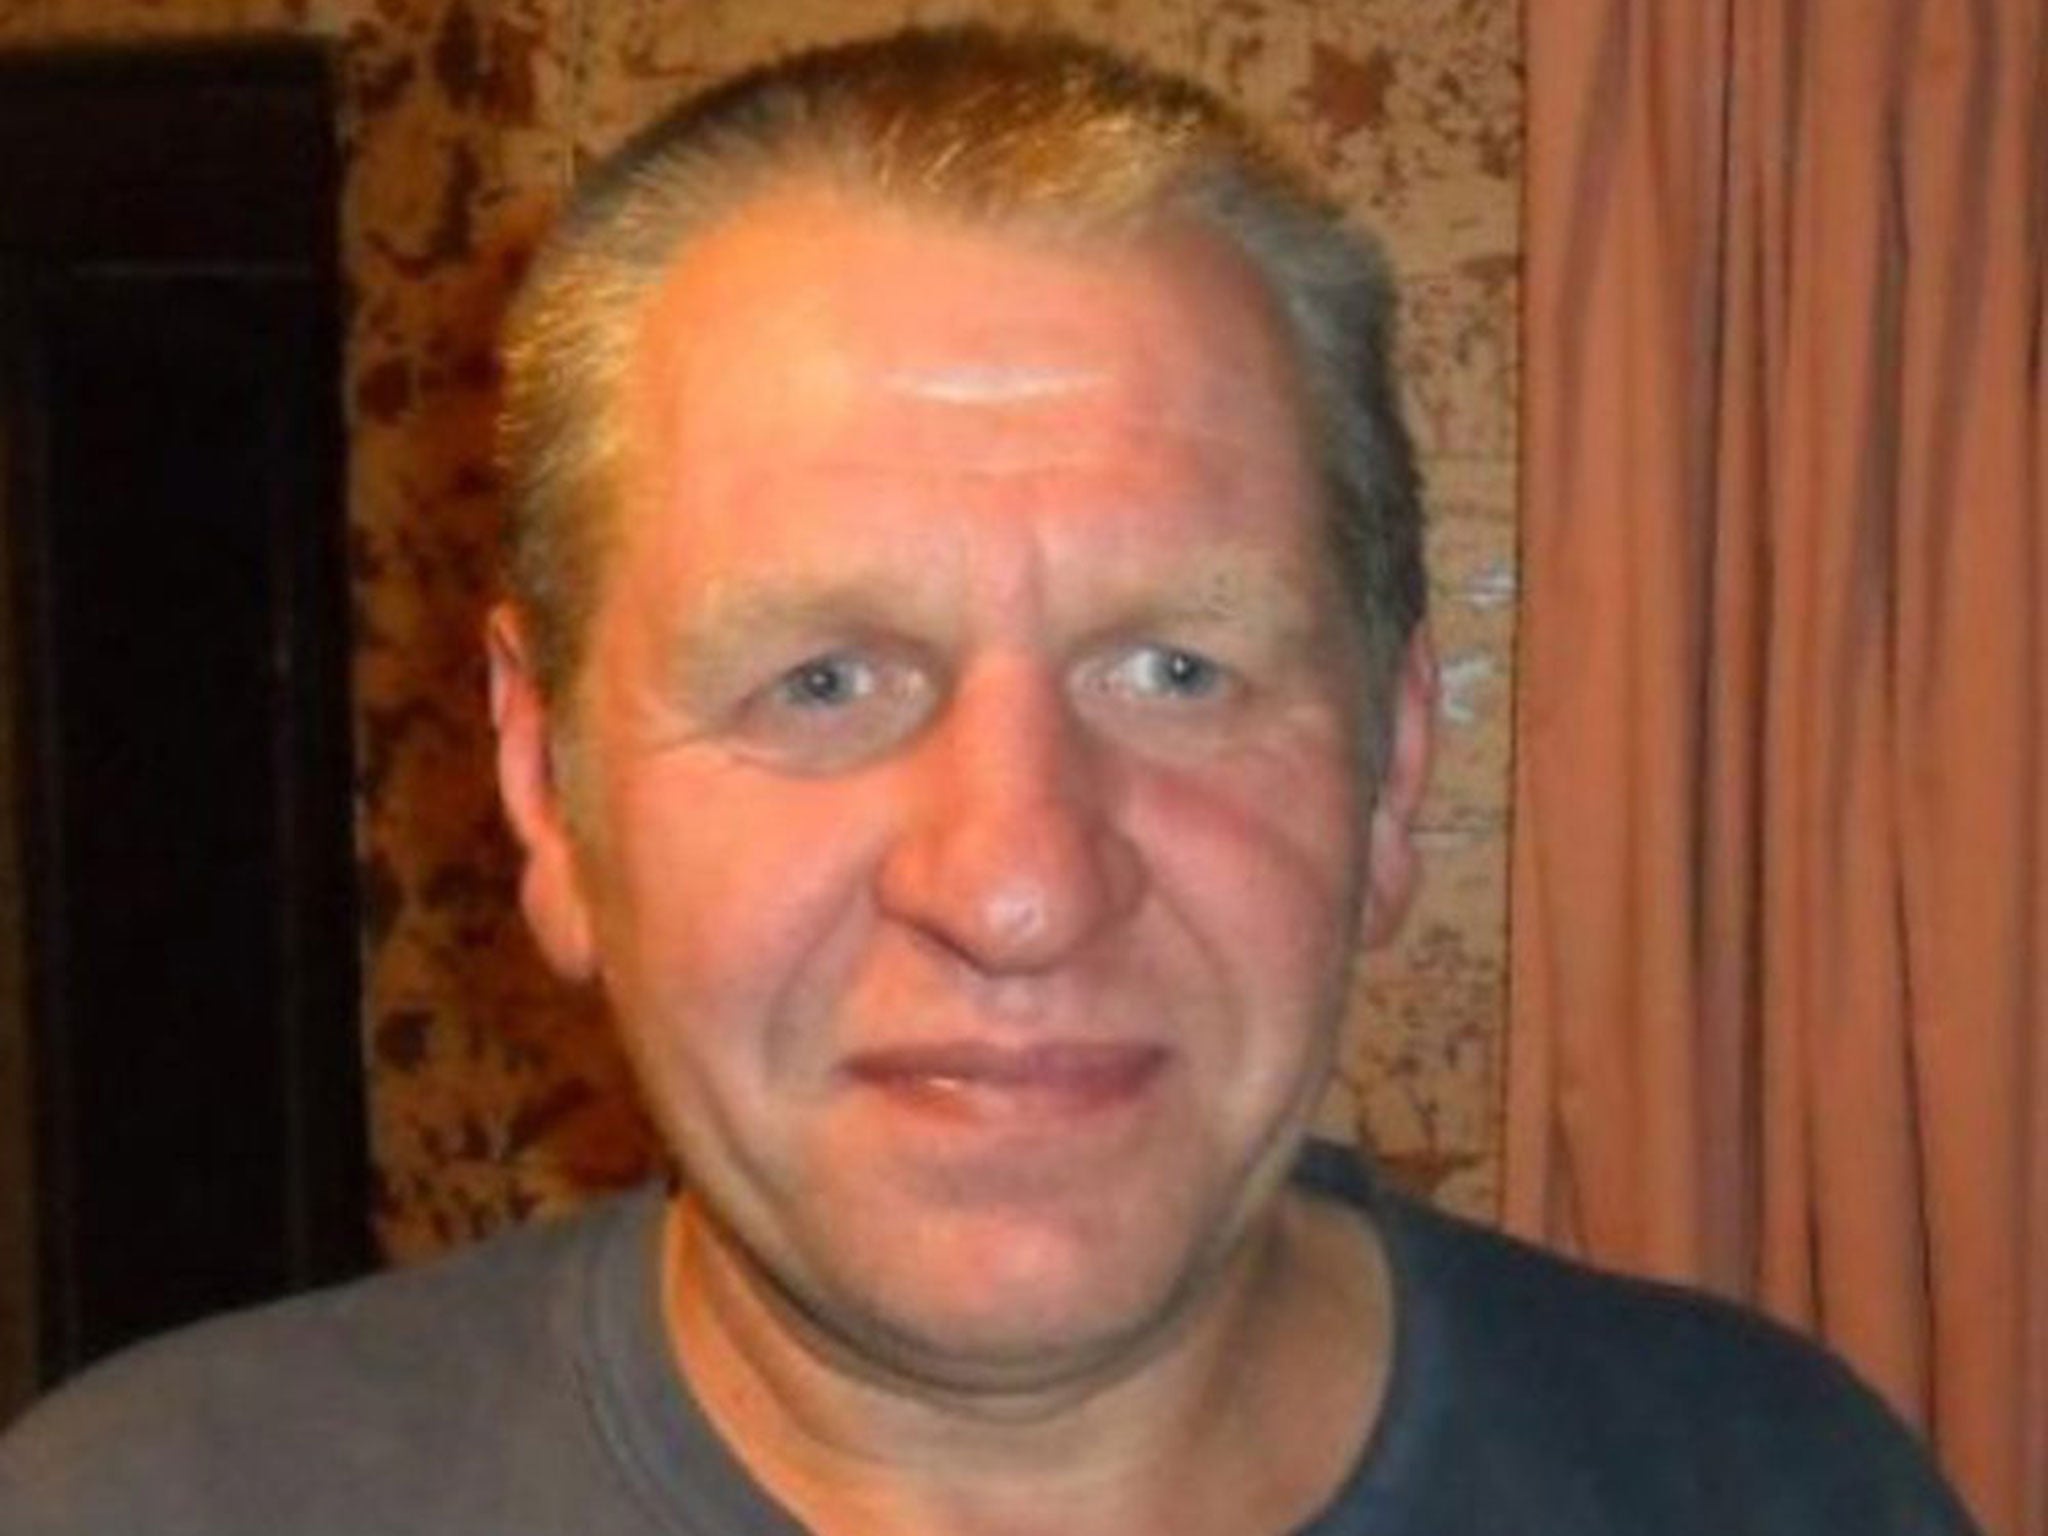 57-year-old Vytautas Jokubauskas has been charged with murder